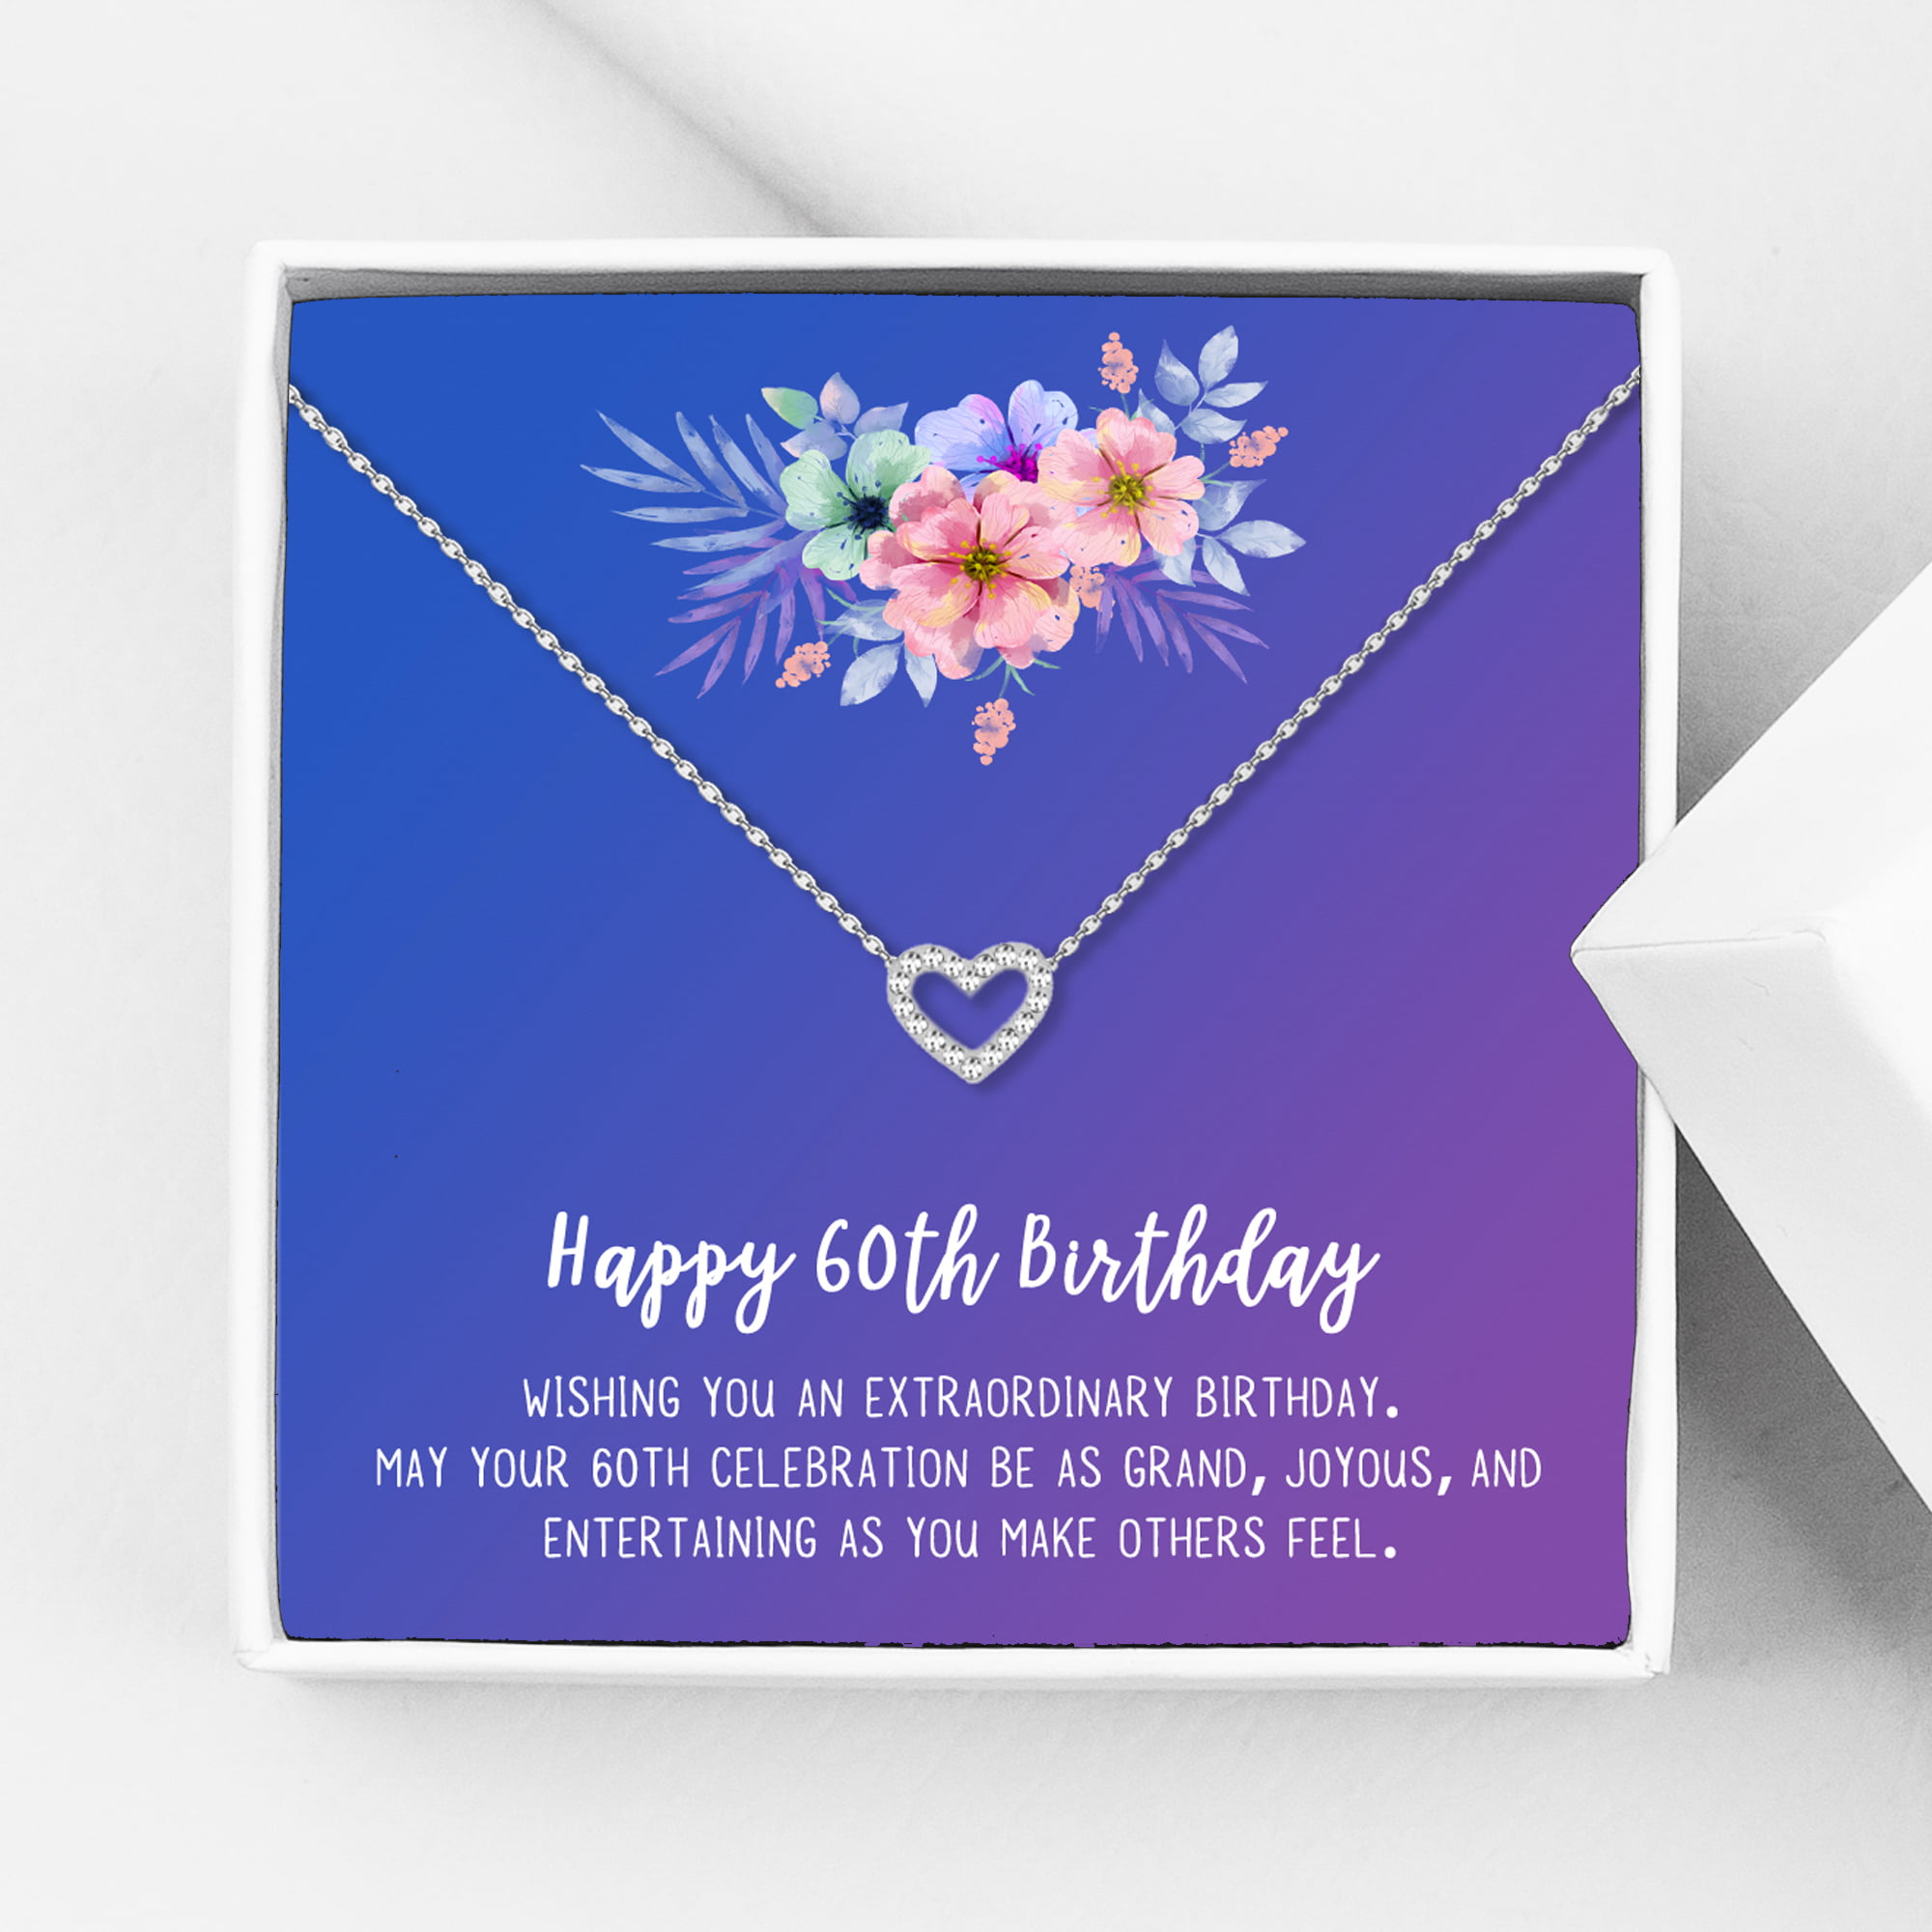 Happy 60th Birthday Alluring Necklace 60th Necklace birthday gifts for Mom,Gifts Jewelry 60th Birthday Gift Birthday Gift Ideas for Women